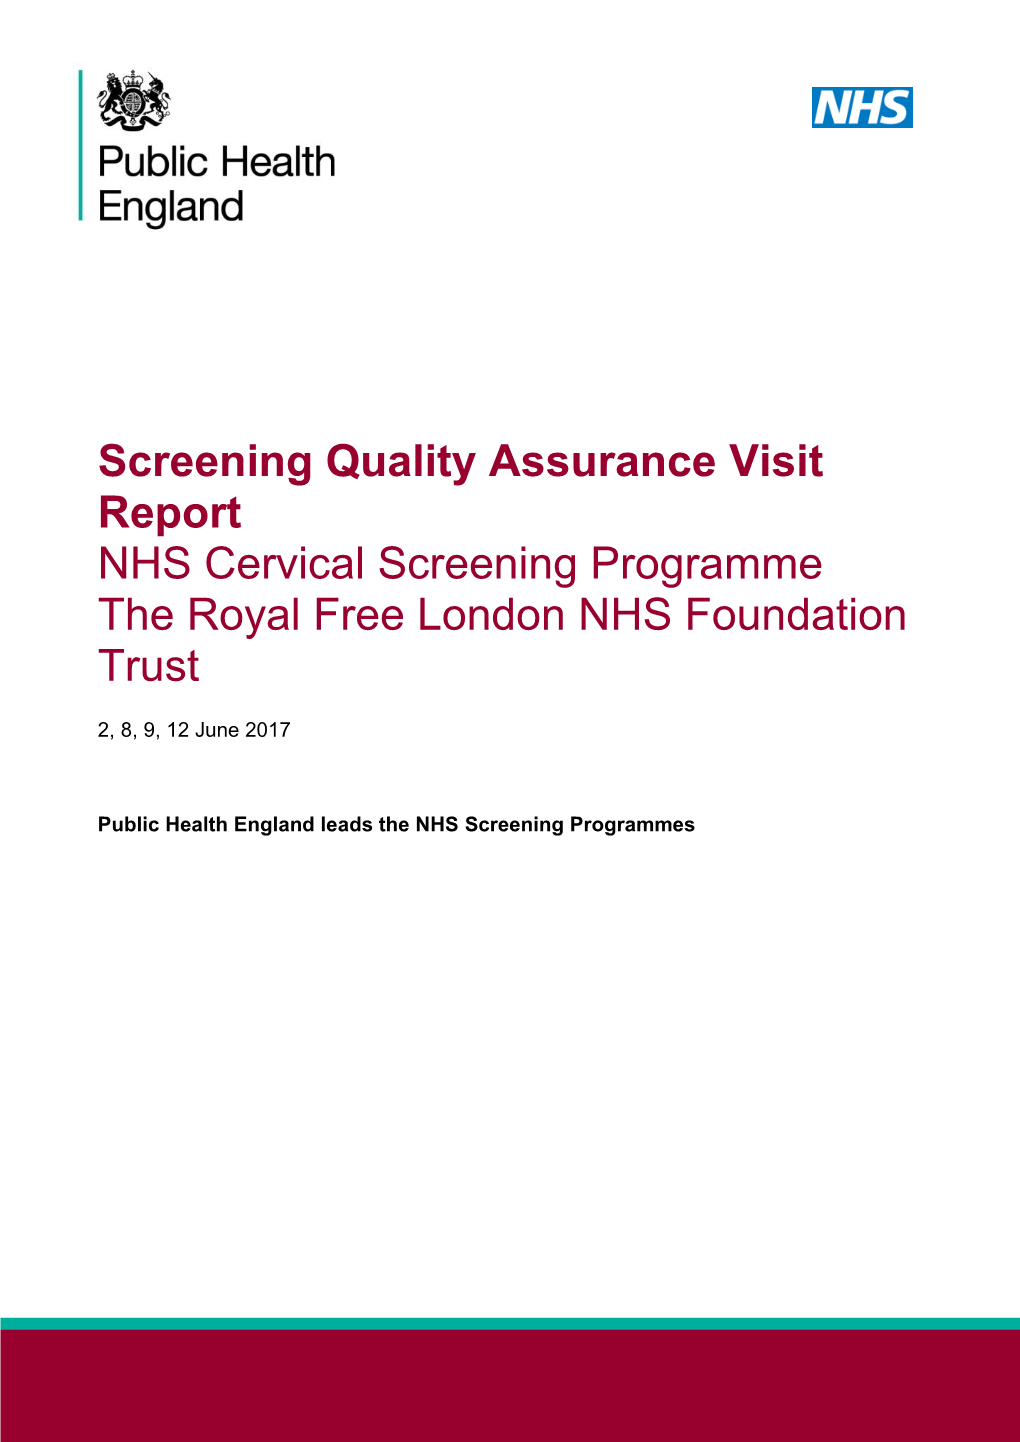 QA Visit Report Cervical Screening Programme Royal Free London